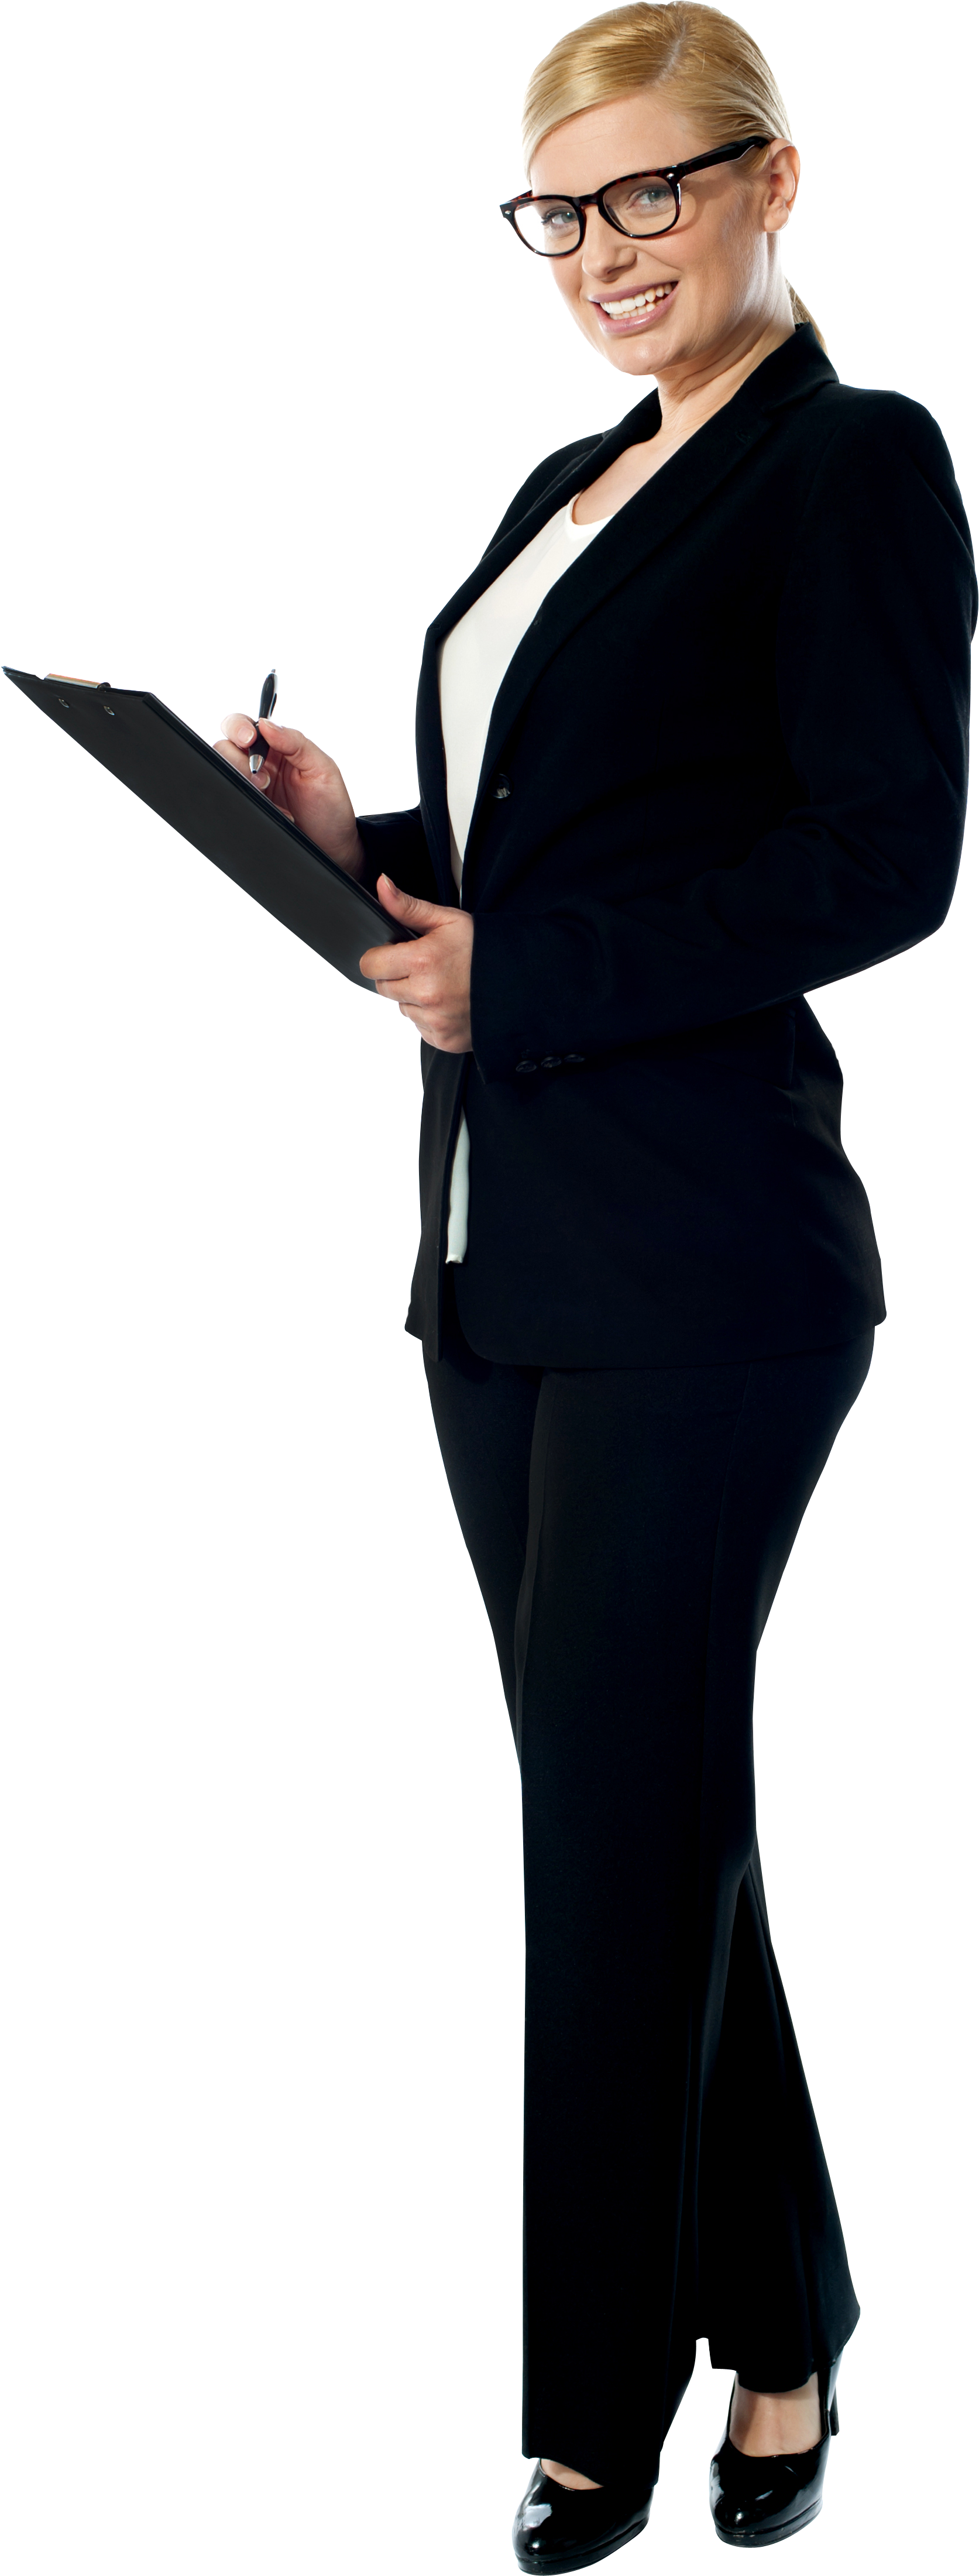 Professional Business Woman PNG Transparent Image